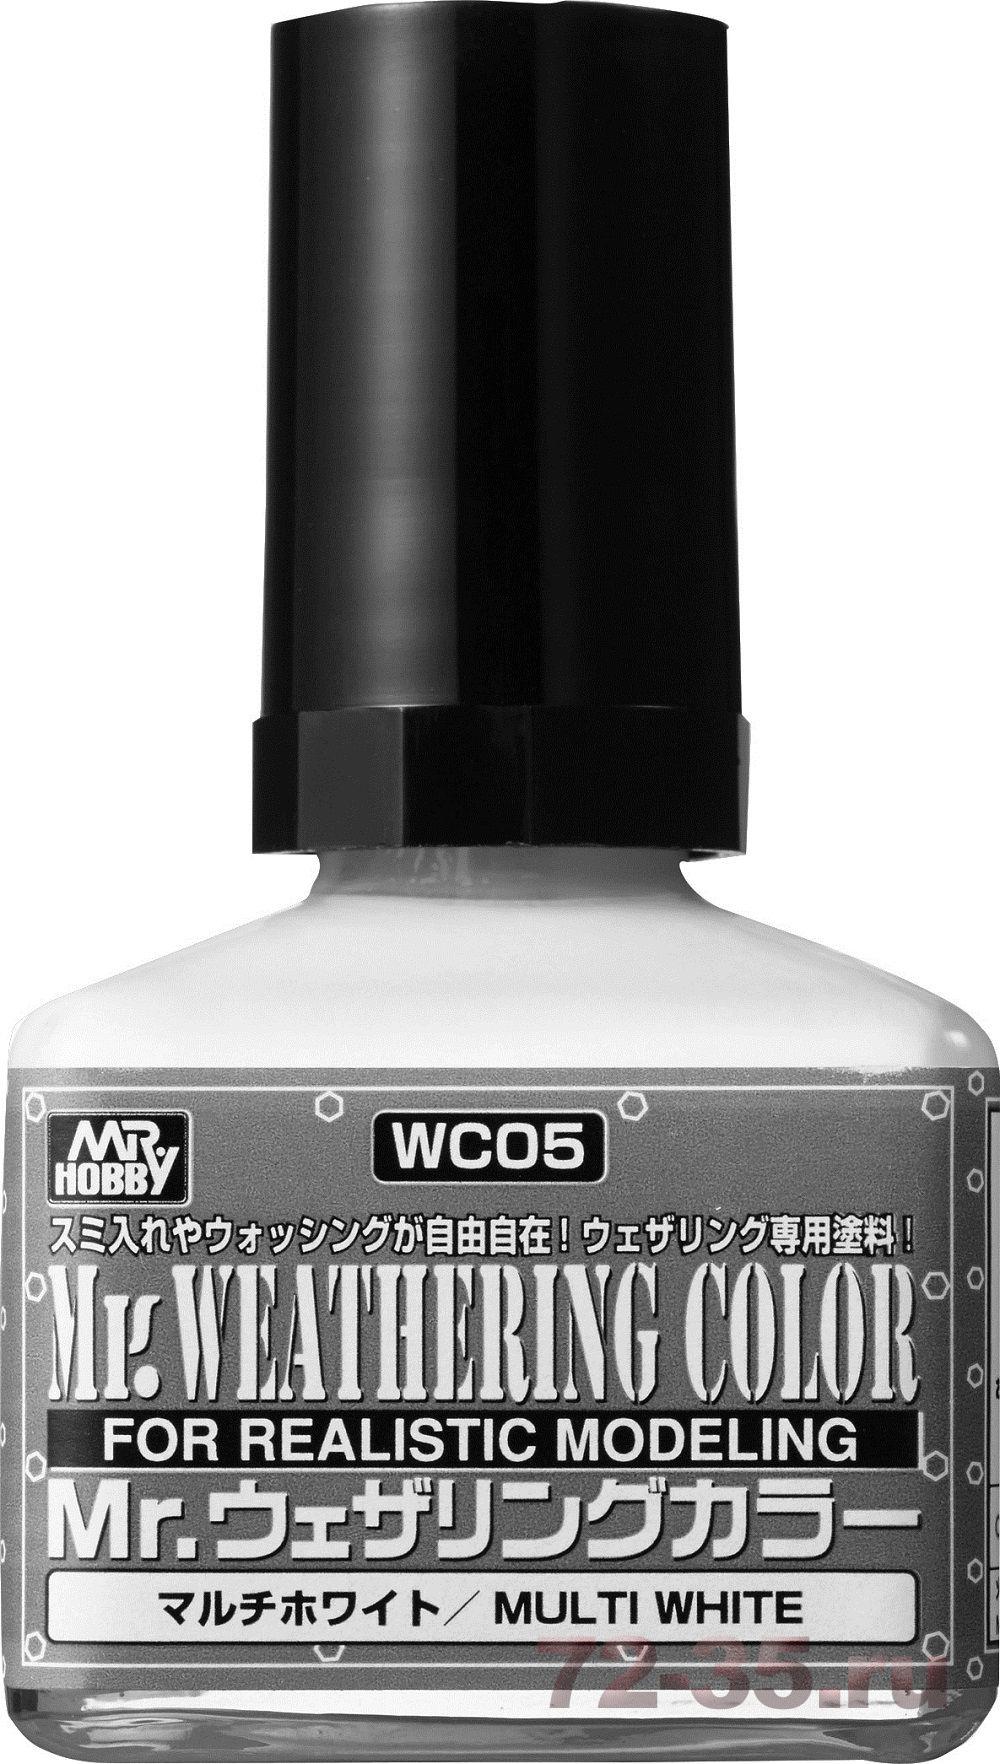 Смывка MR.WEATHERING Color - Multi White gsi_wc05.jpg